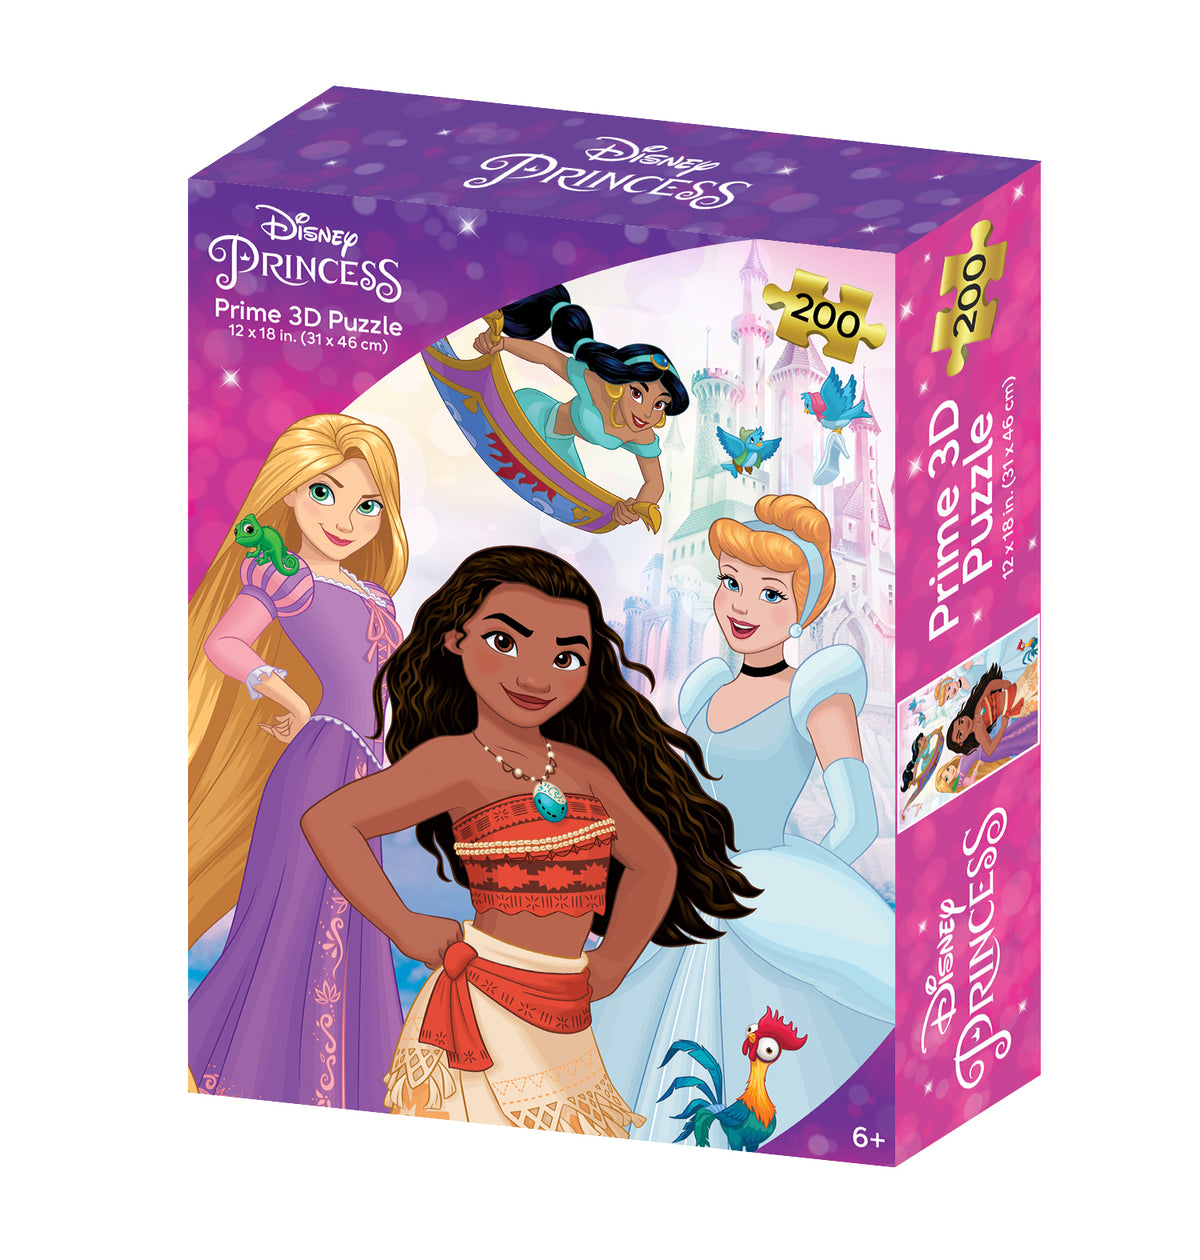 Princess Disney 3D Jigsaw Puzzle 33038 200pc 18x12"